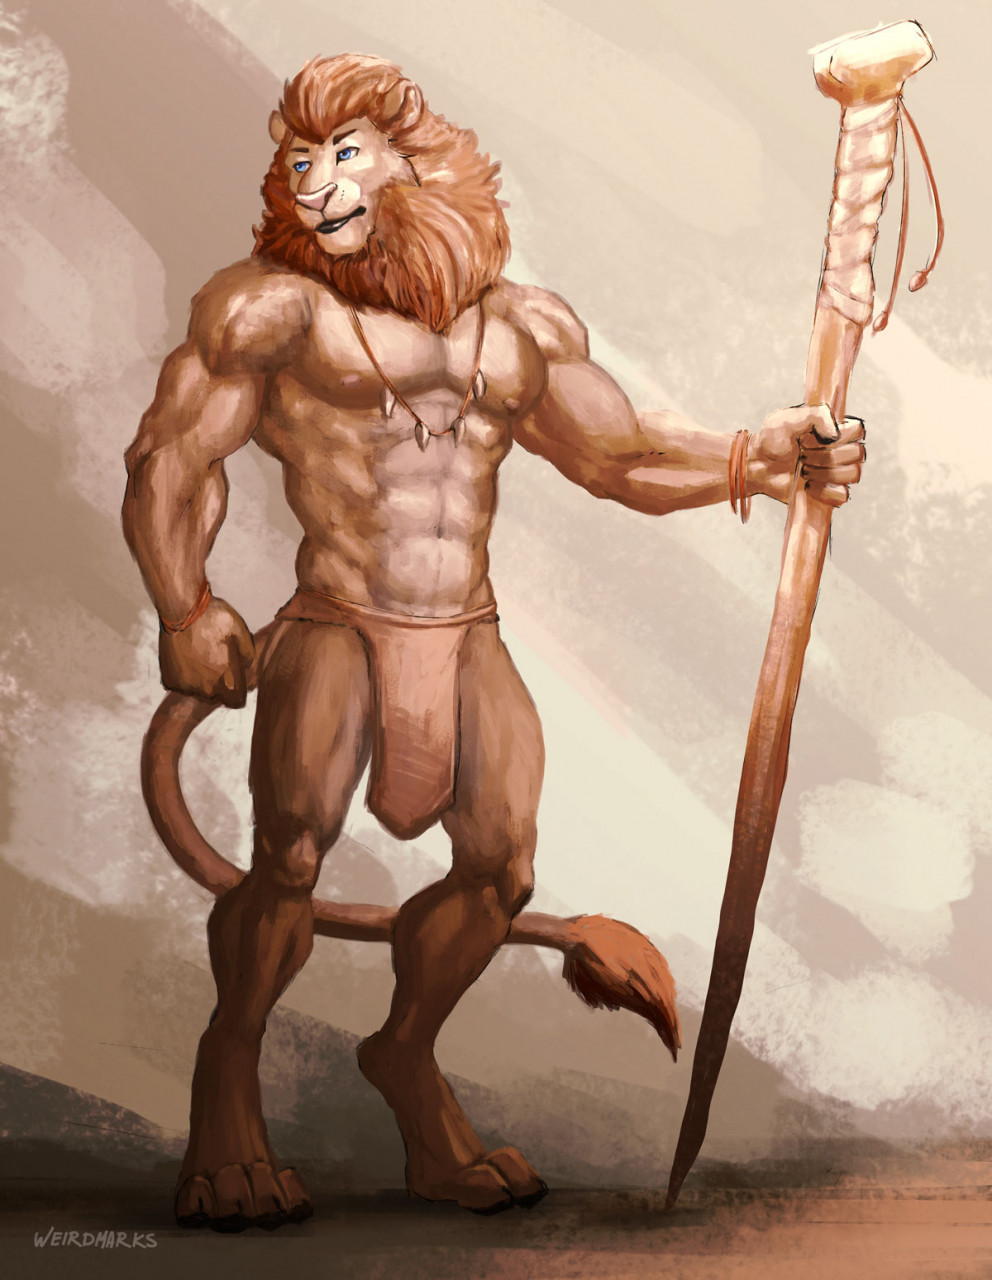 lion tribal art